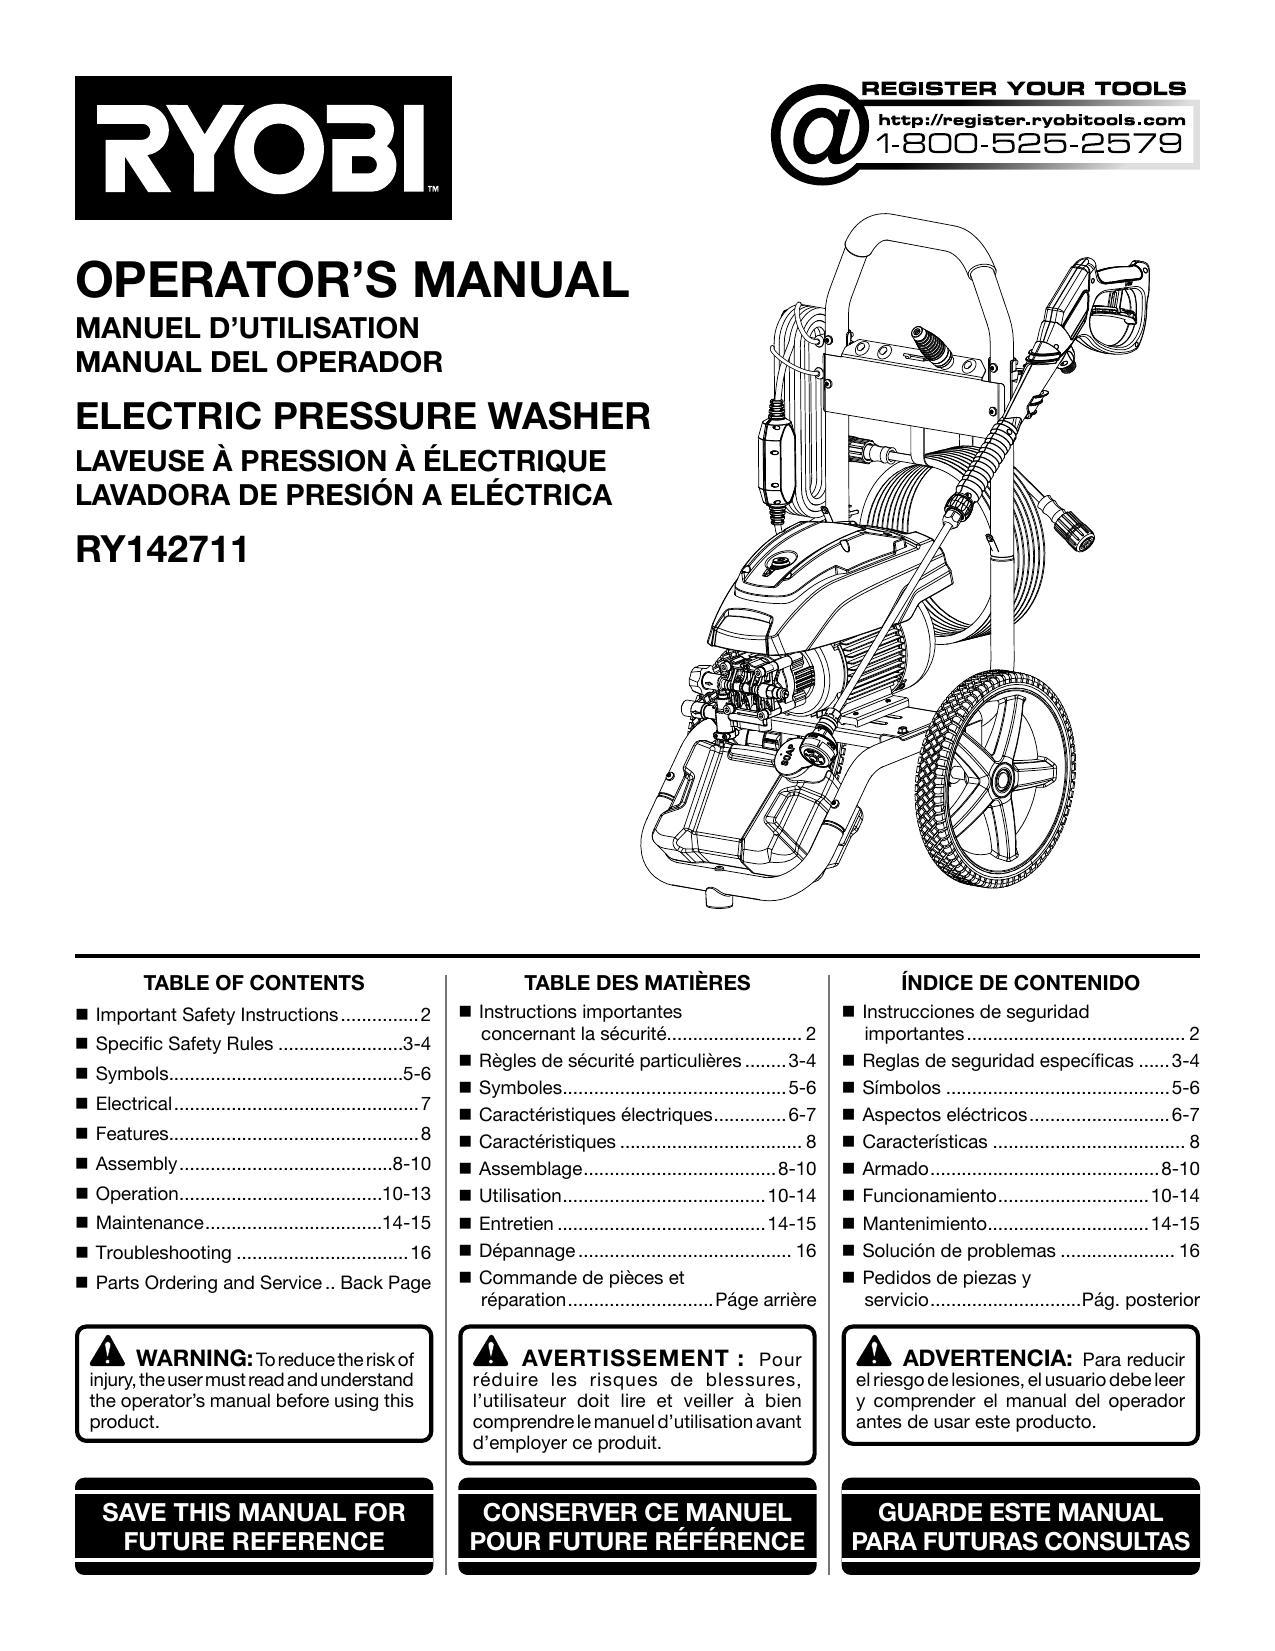 ryobi-electric-pressure-washer-operators-manual-ry142711.pdf